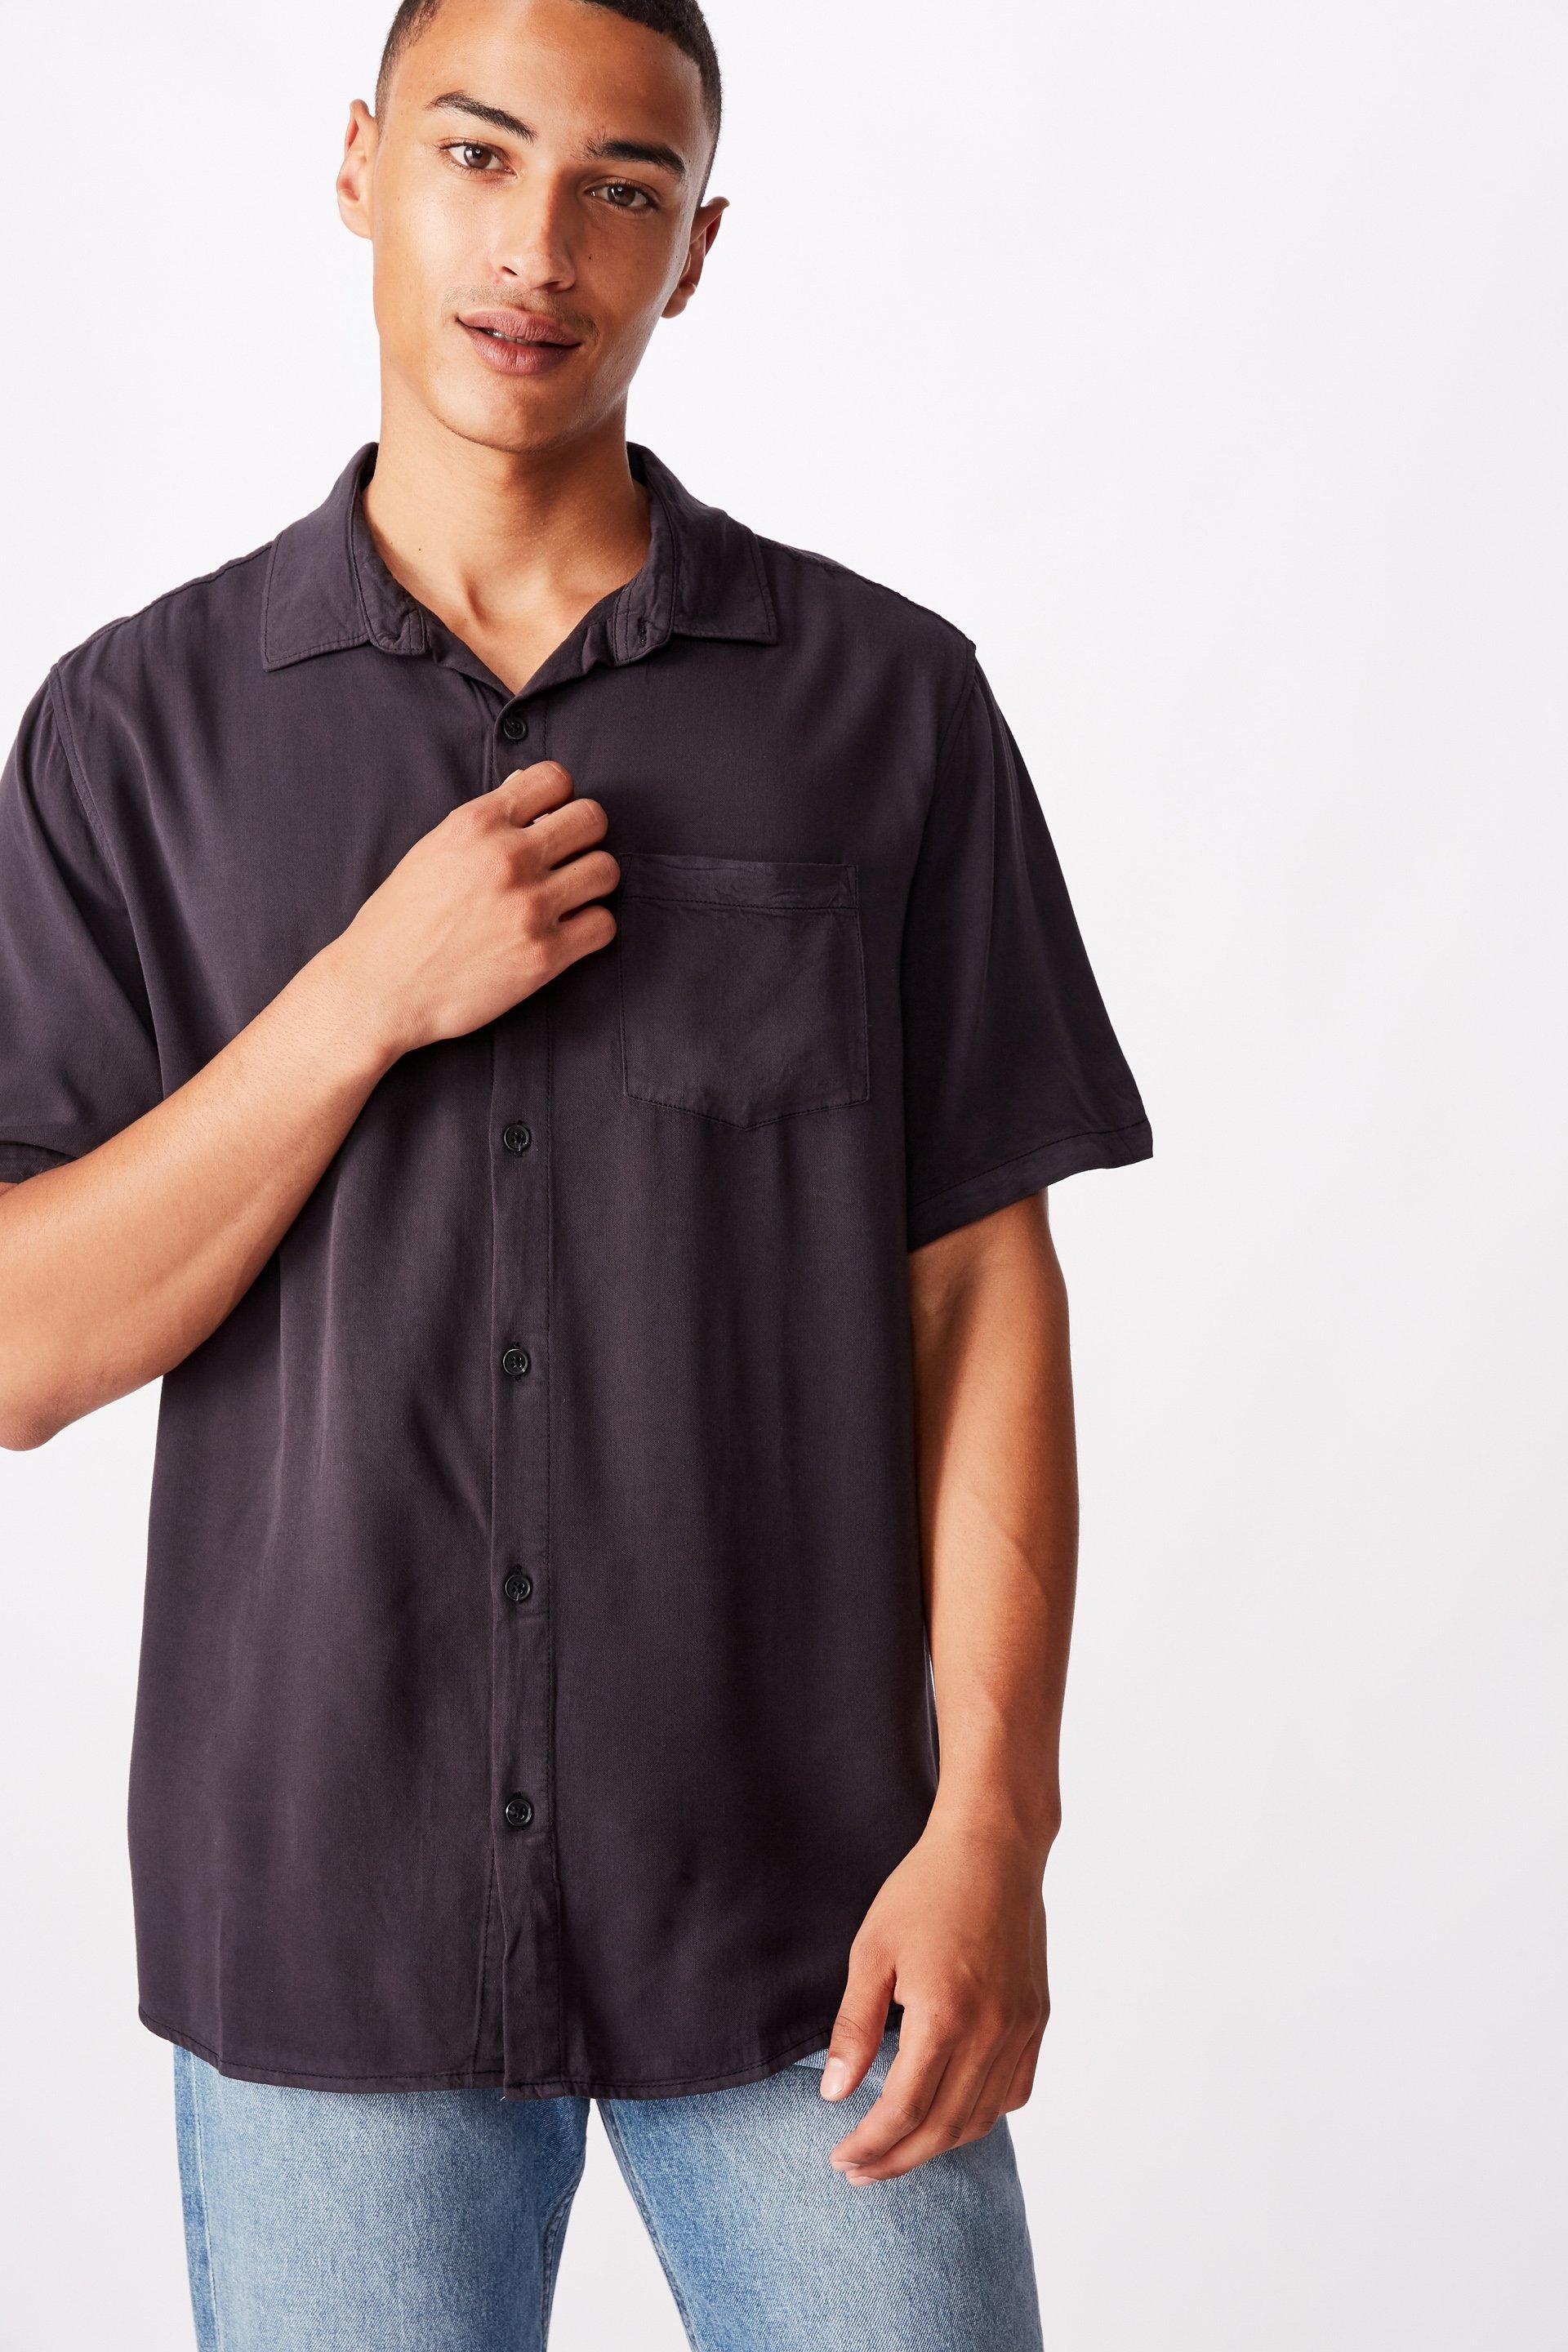 91 short sleeve shirt - washed black Cotton On Shirts | Superbalist.com